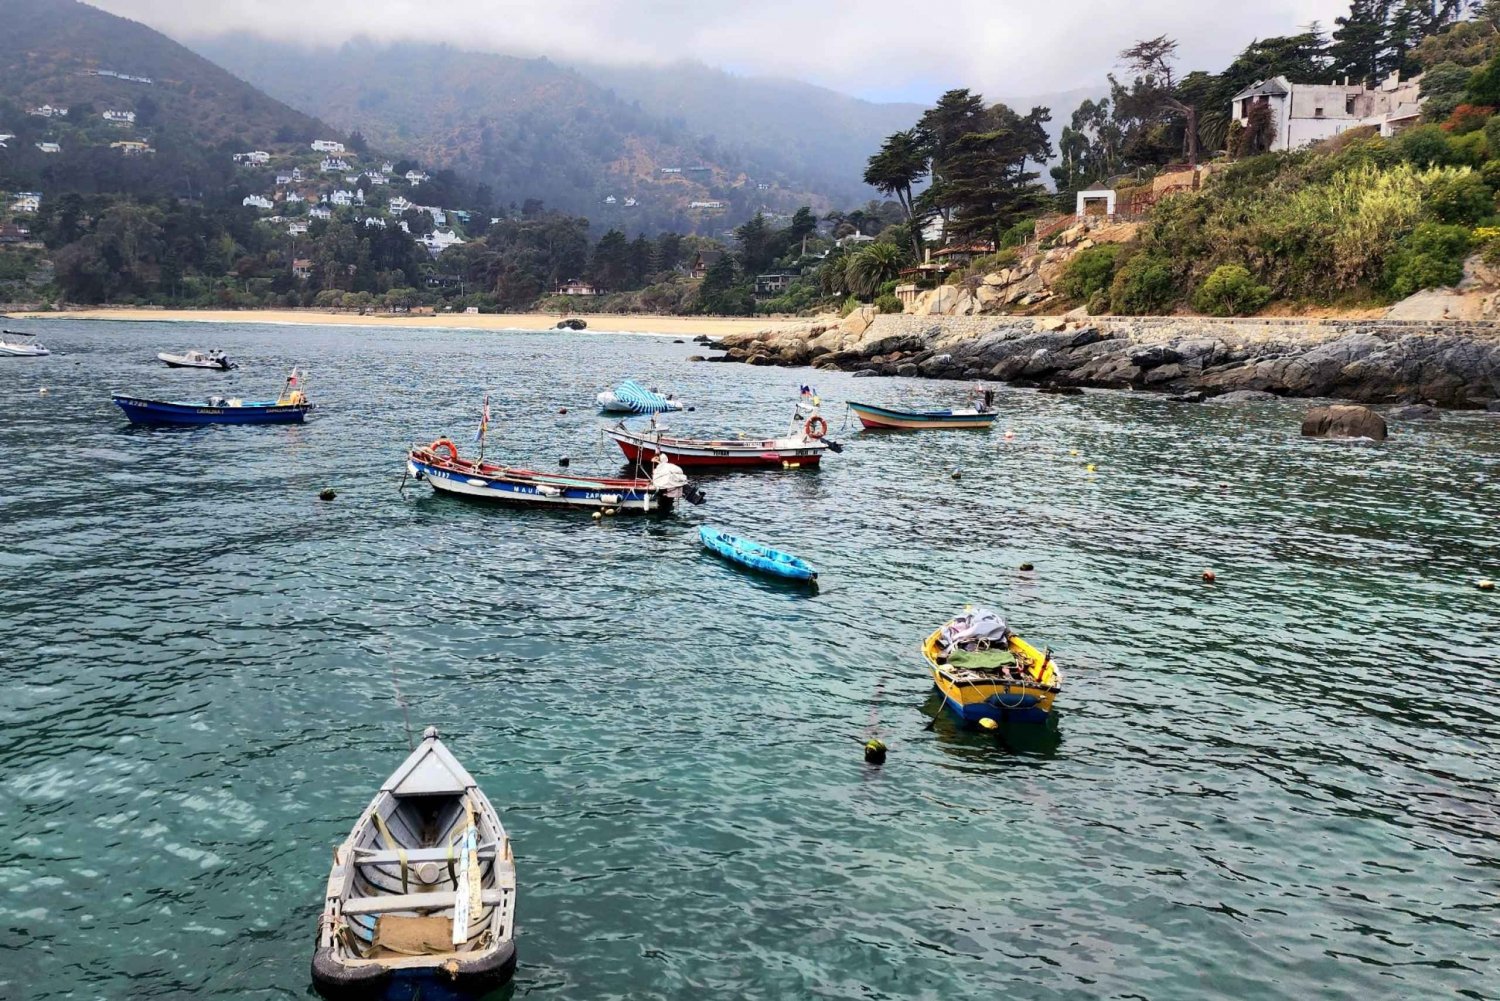 Sportvissen per boot en Chileense empanadas vanuit Valpara